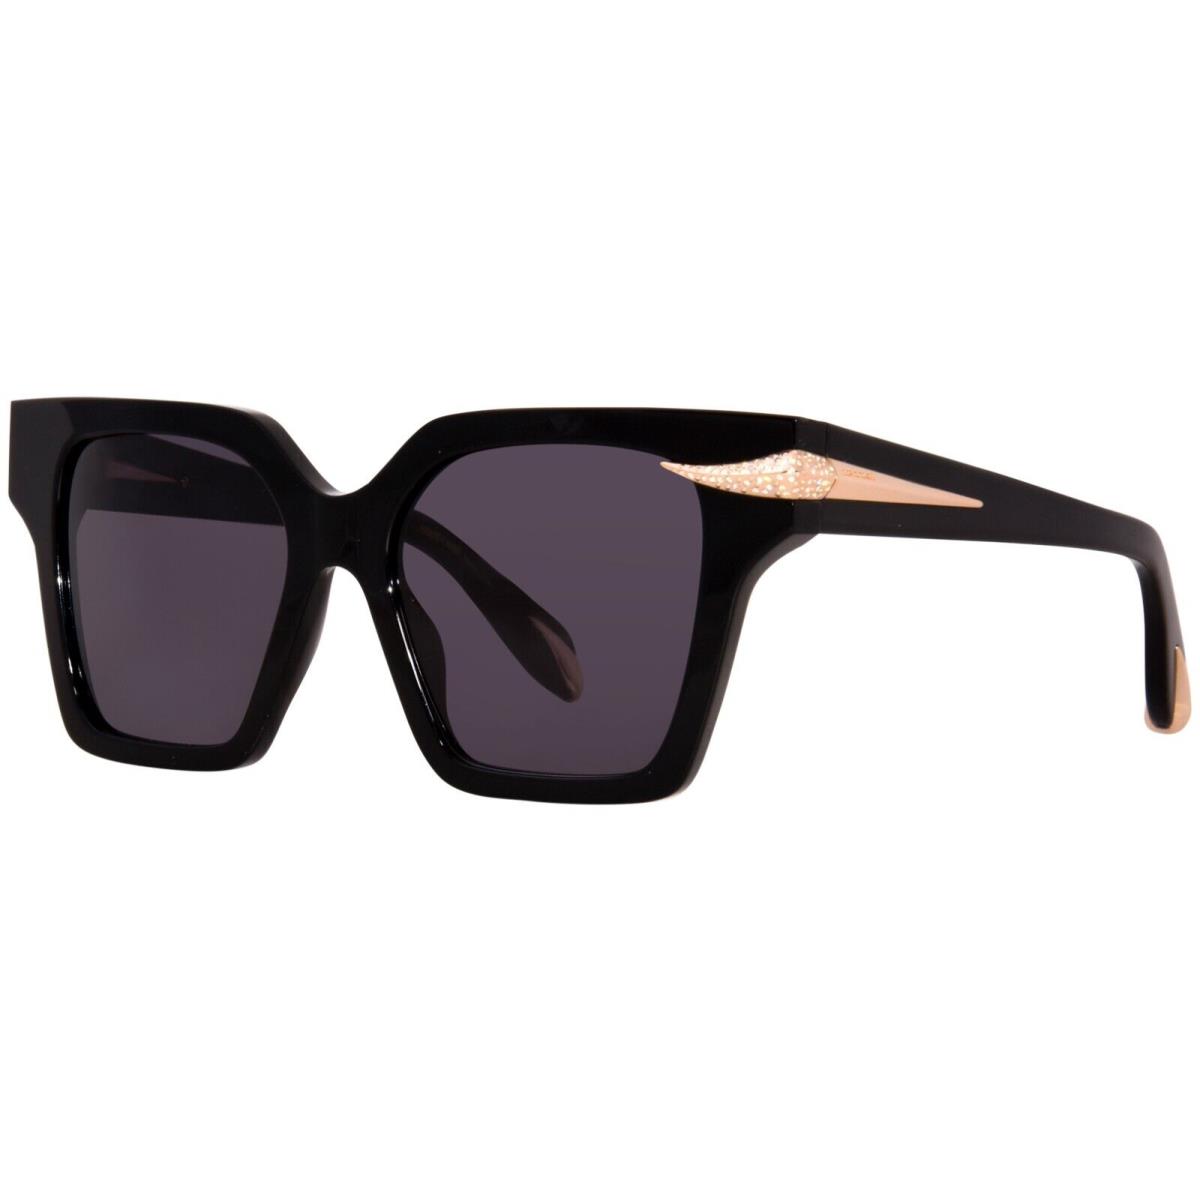 Roberto Cavalli Sunglasses SRC002 700 Black Frames Gray Lens 54MM